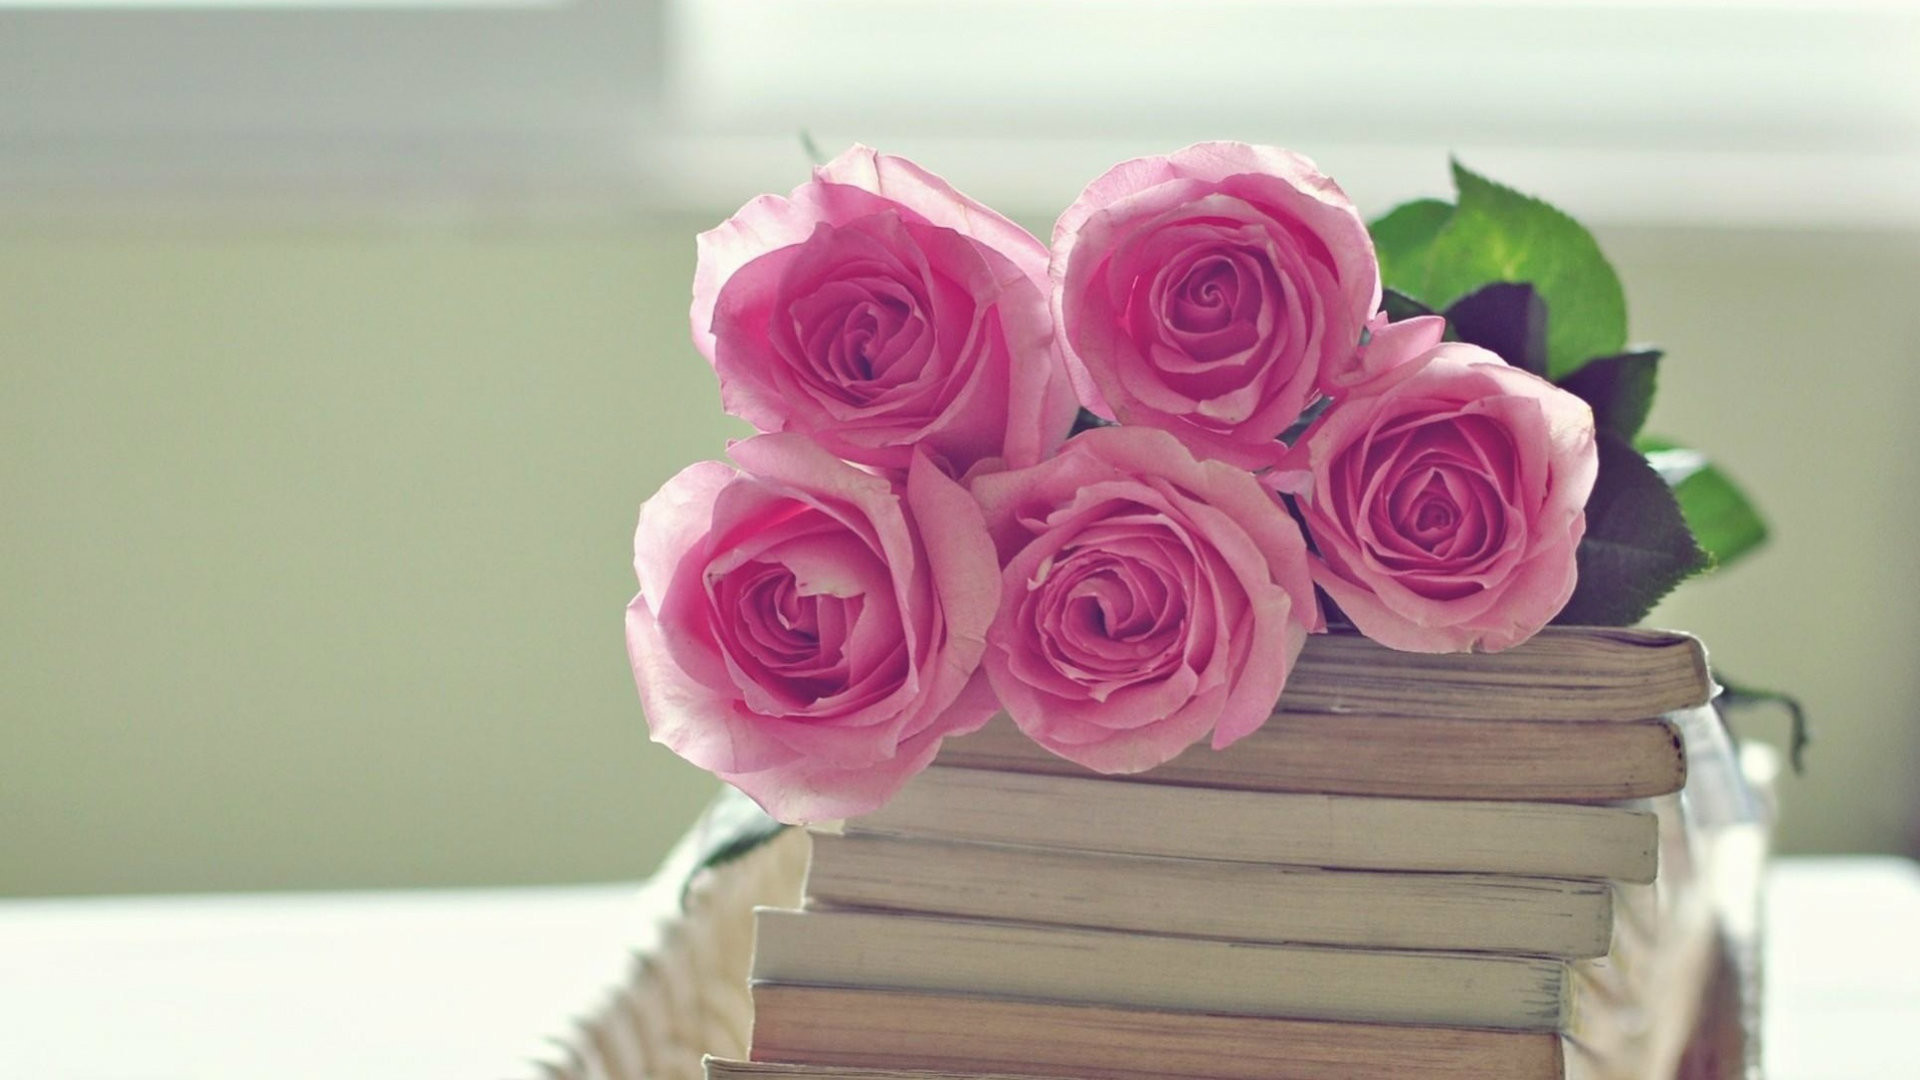 1920x1080 Full HD 1080p Pink Rose Wallpaper - HD Flowers for Desktop